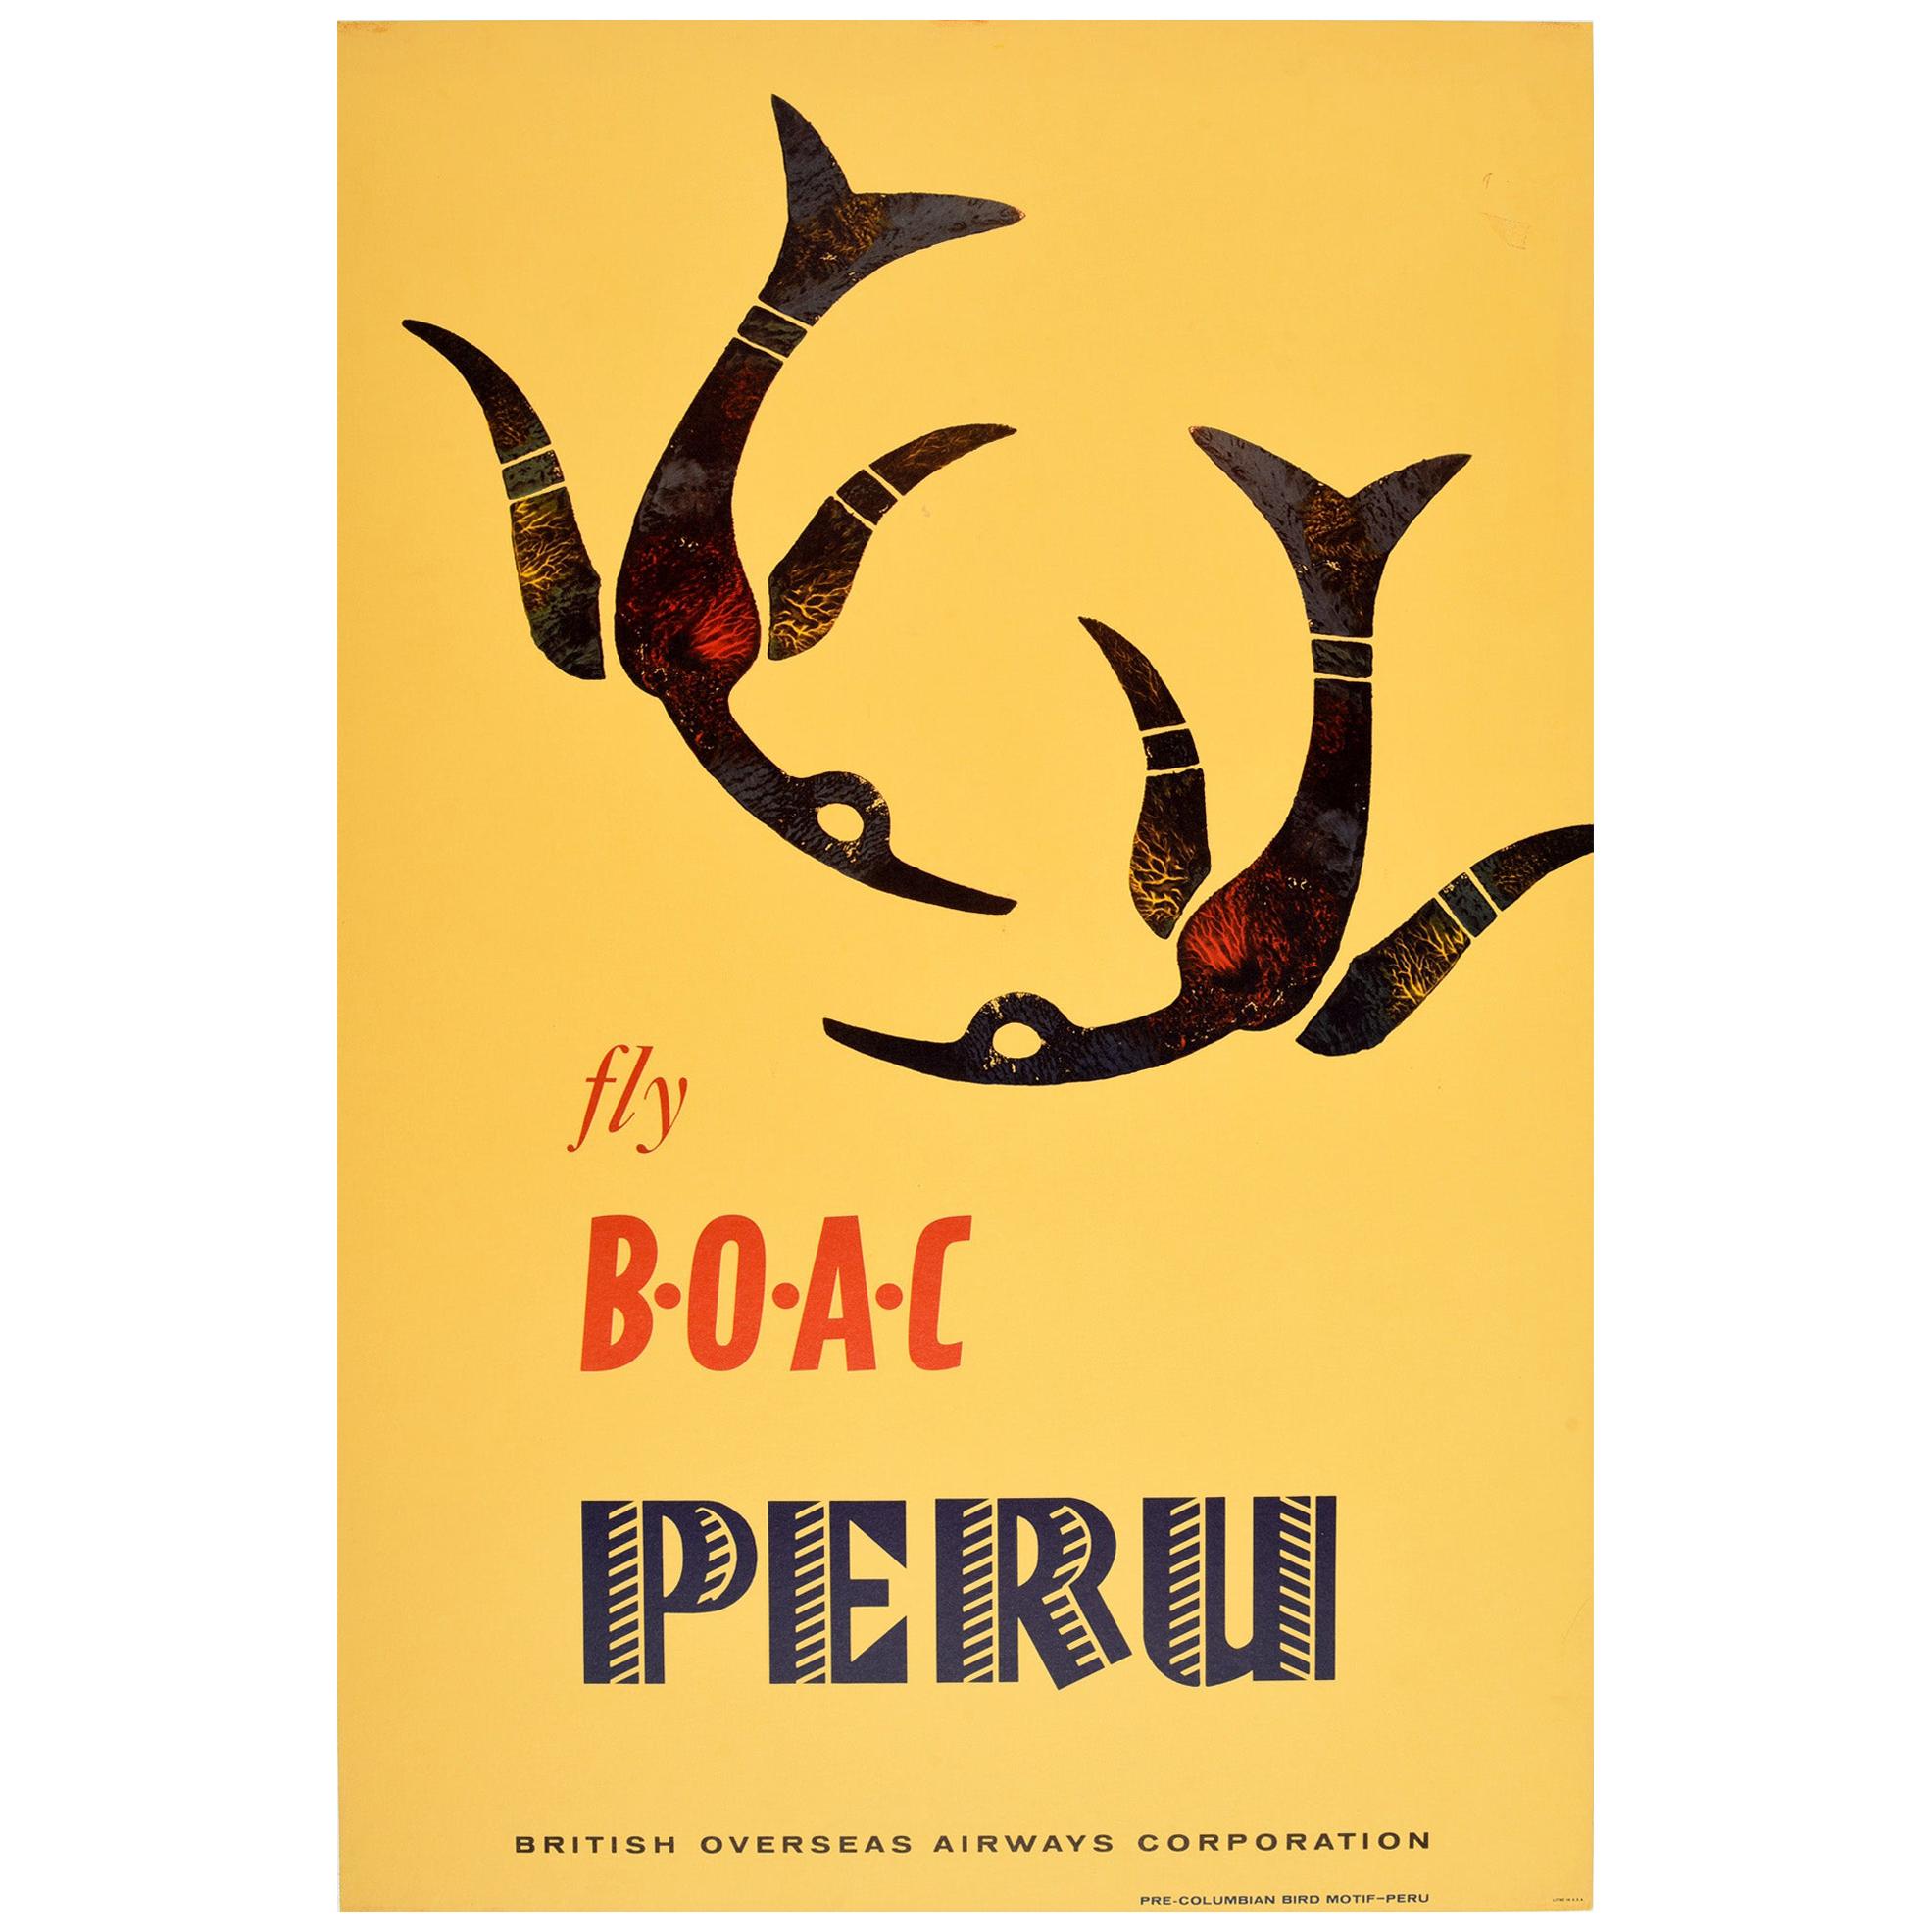 Original Vintage Poster Fly BOAC Peru South America Pre-Columbian Bird Motif Art